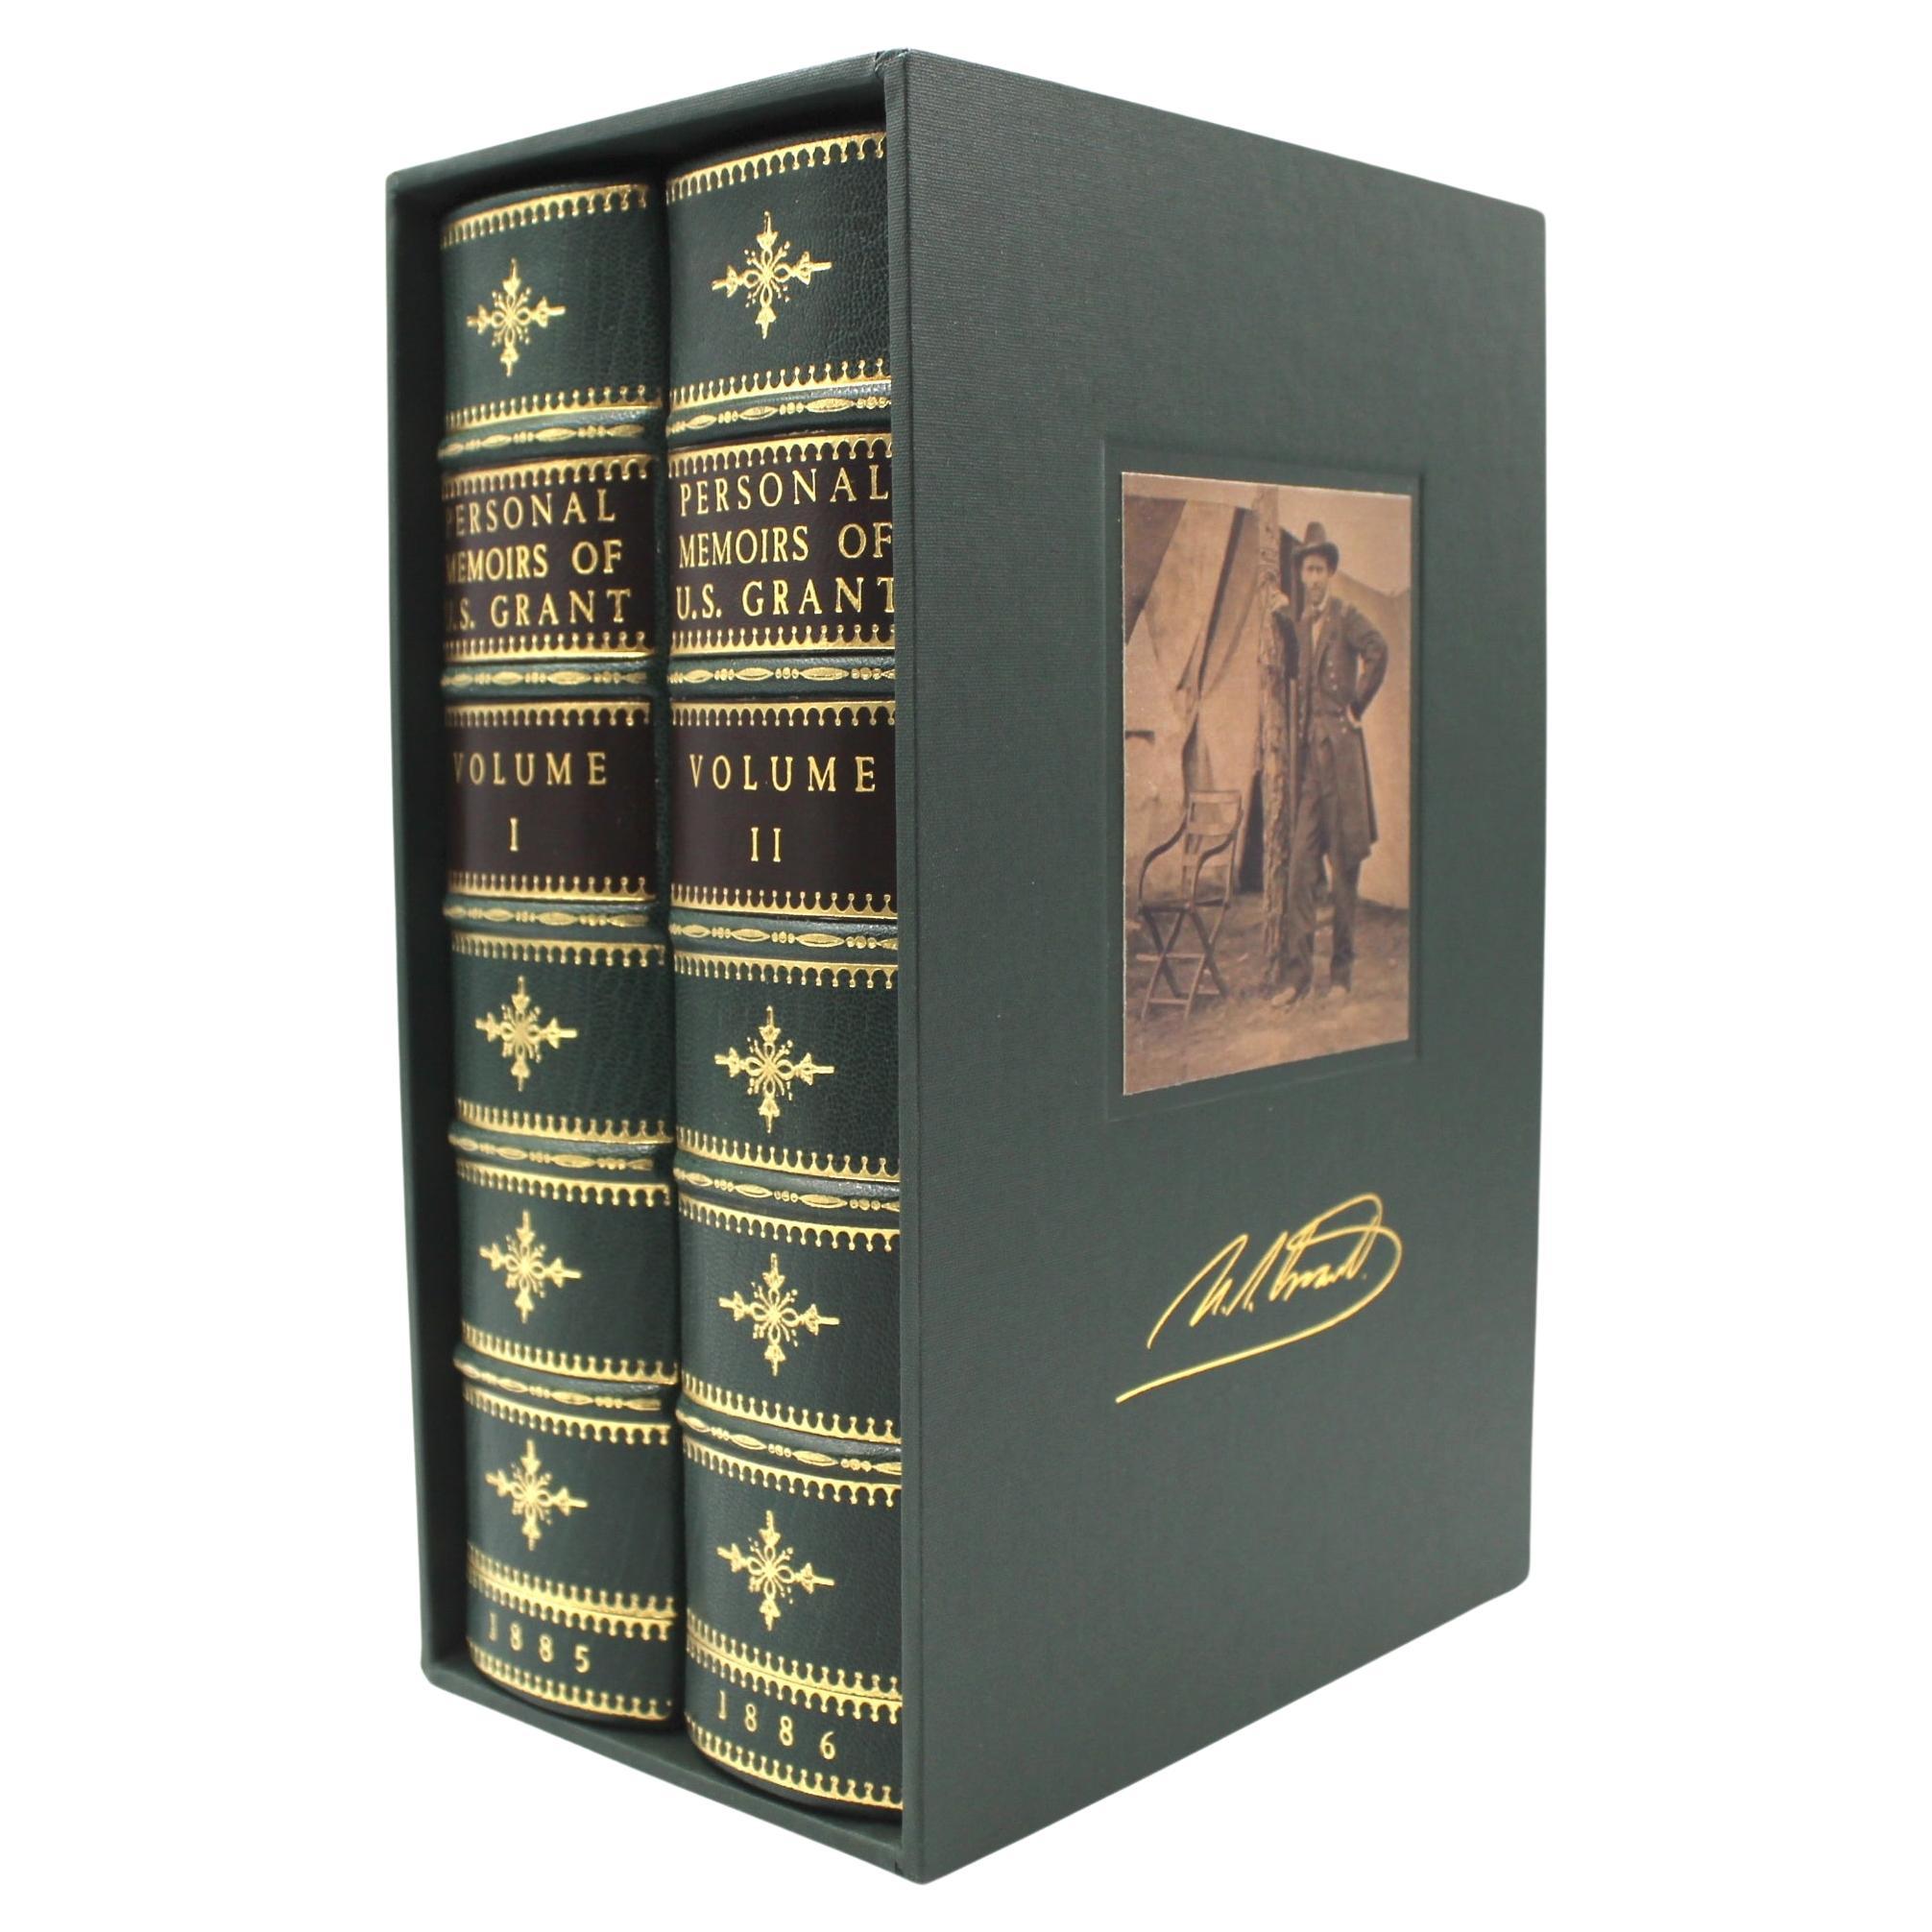 Personal Memoirs of U. S. Grant, Two-Volume Set, 1885-86